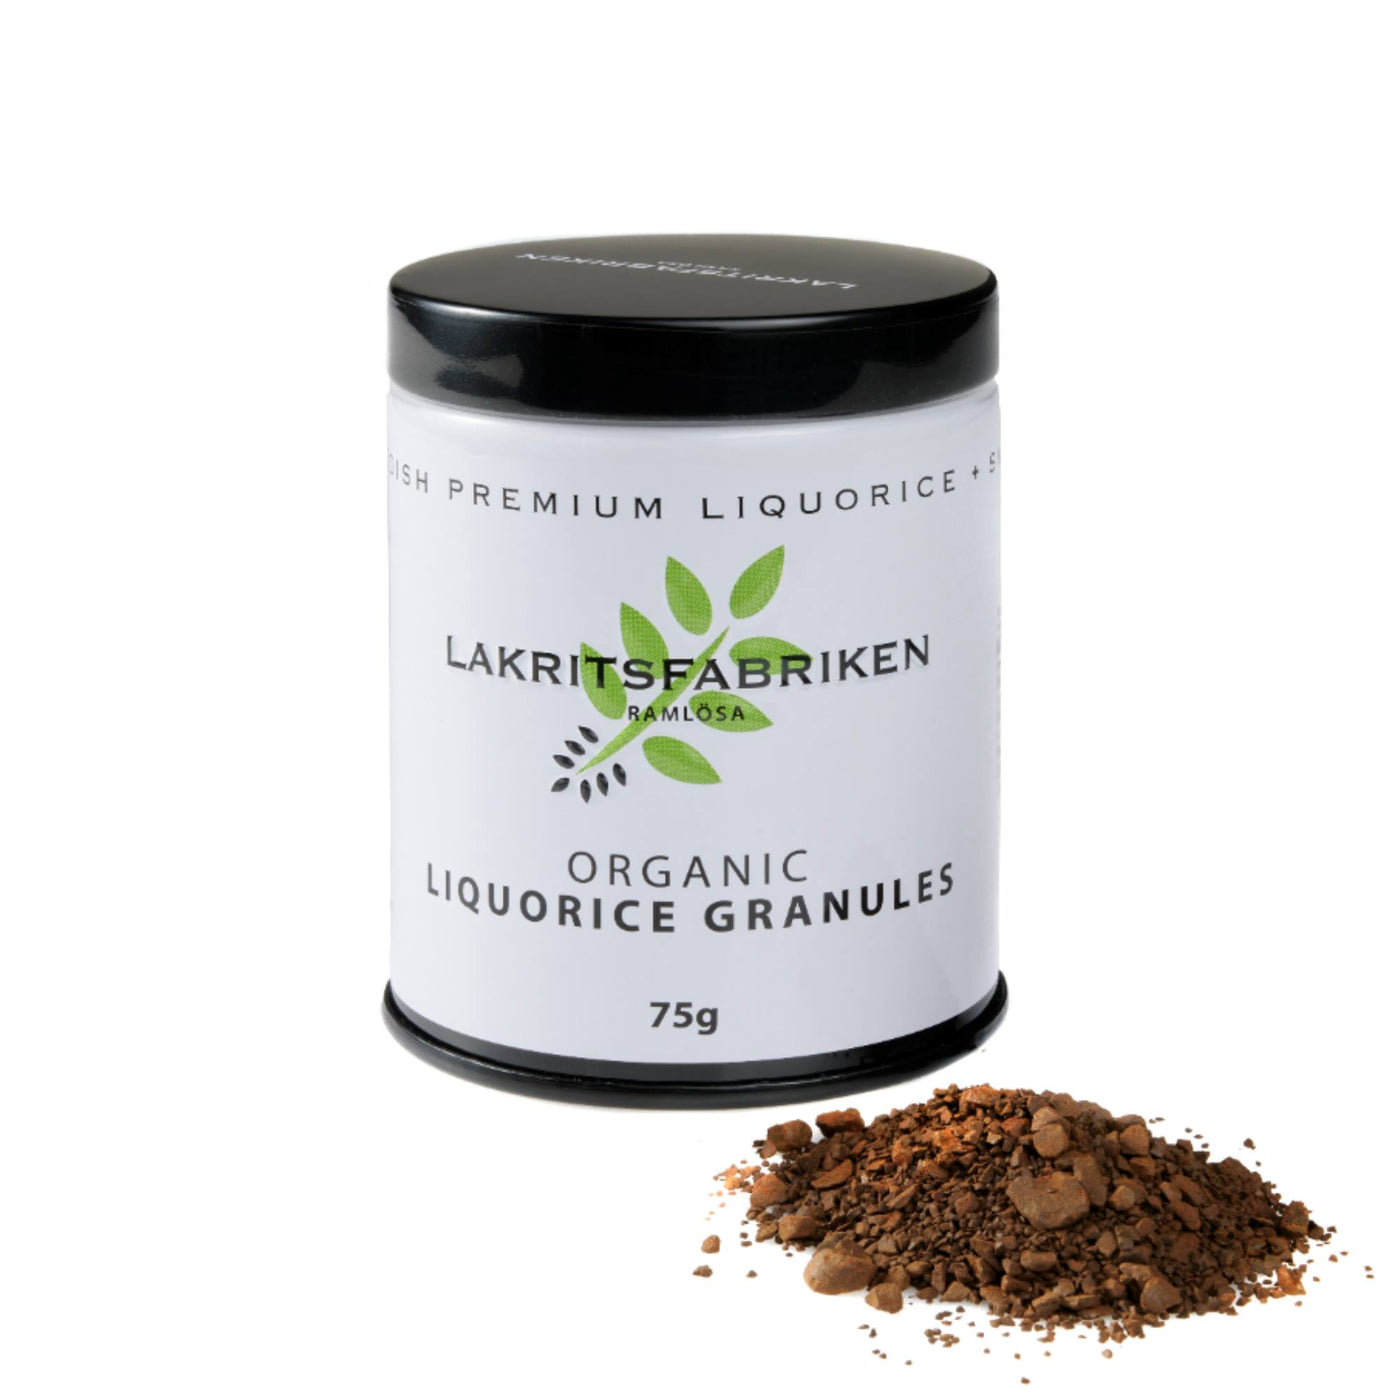 Lakritsfabriken Organic Liquorice Granules - 75g